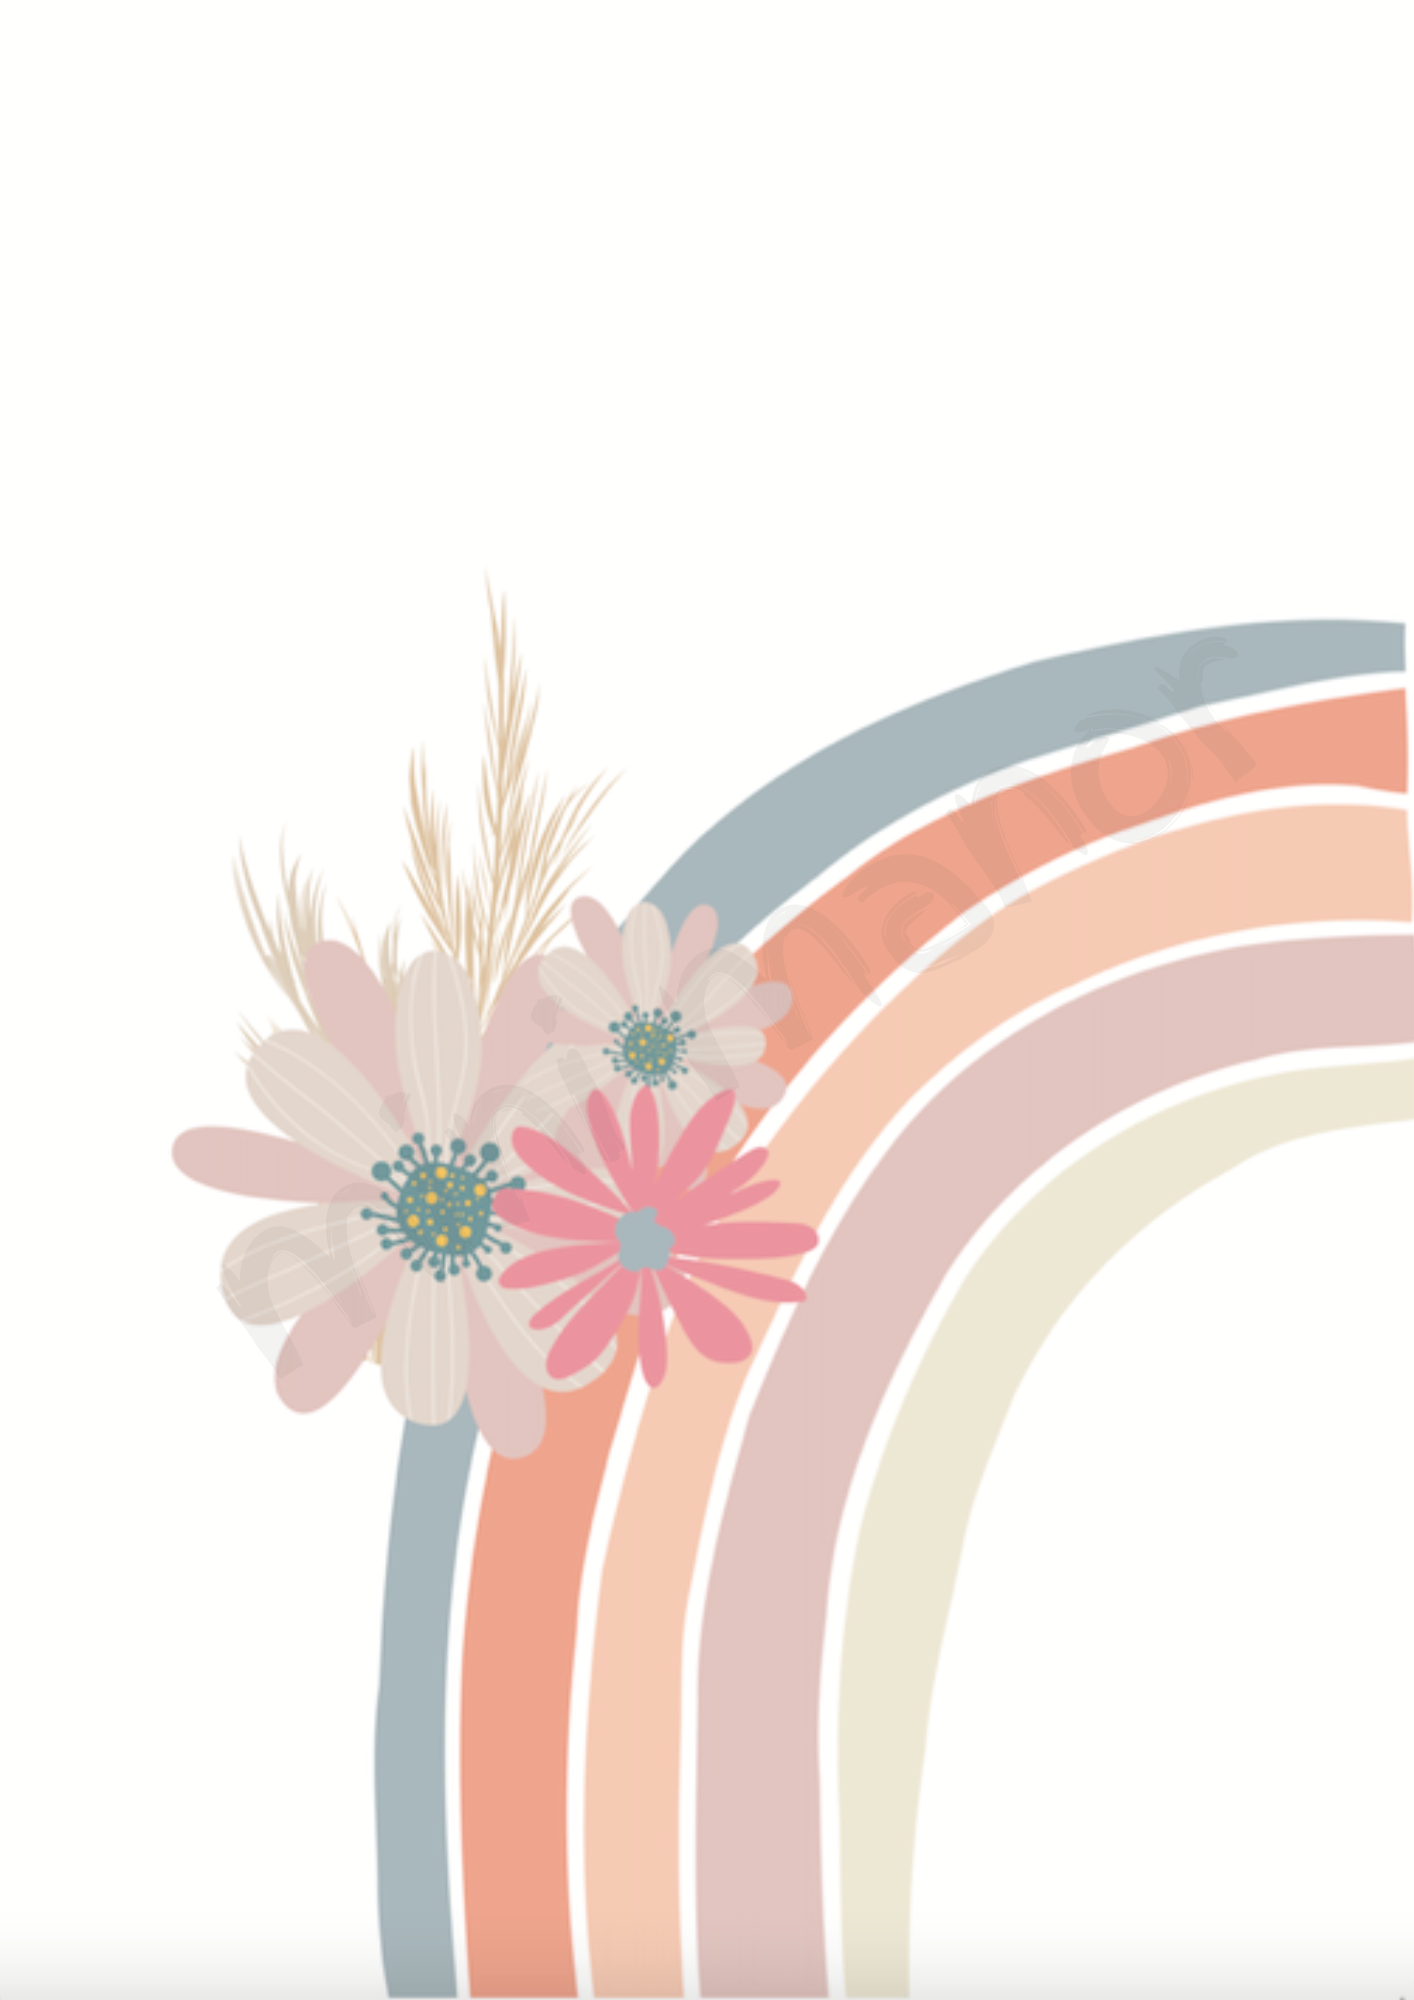 floral print tumblr themes